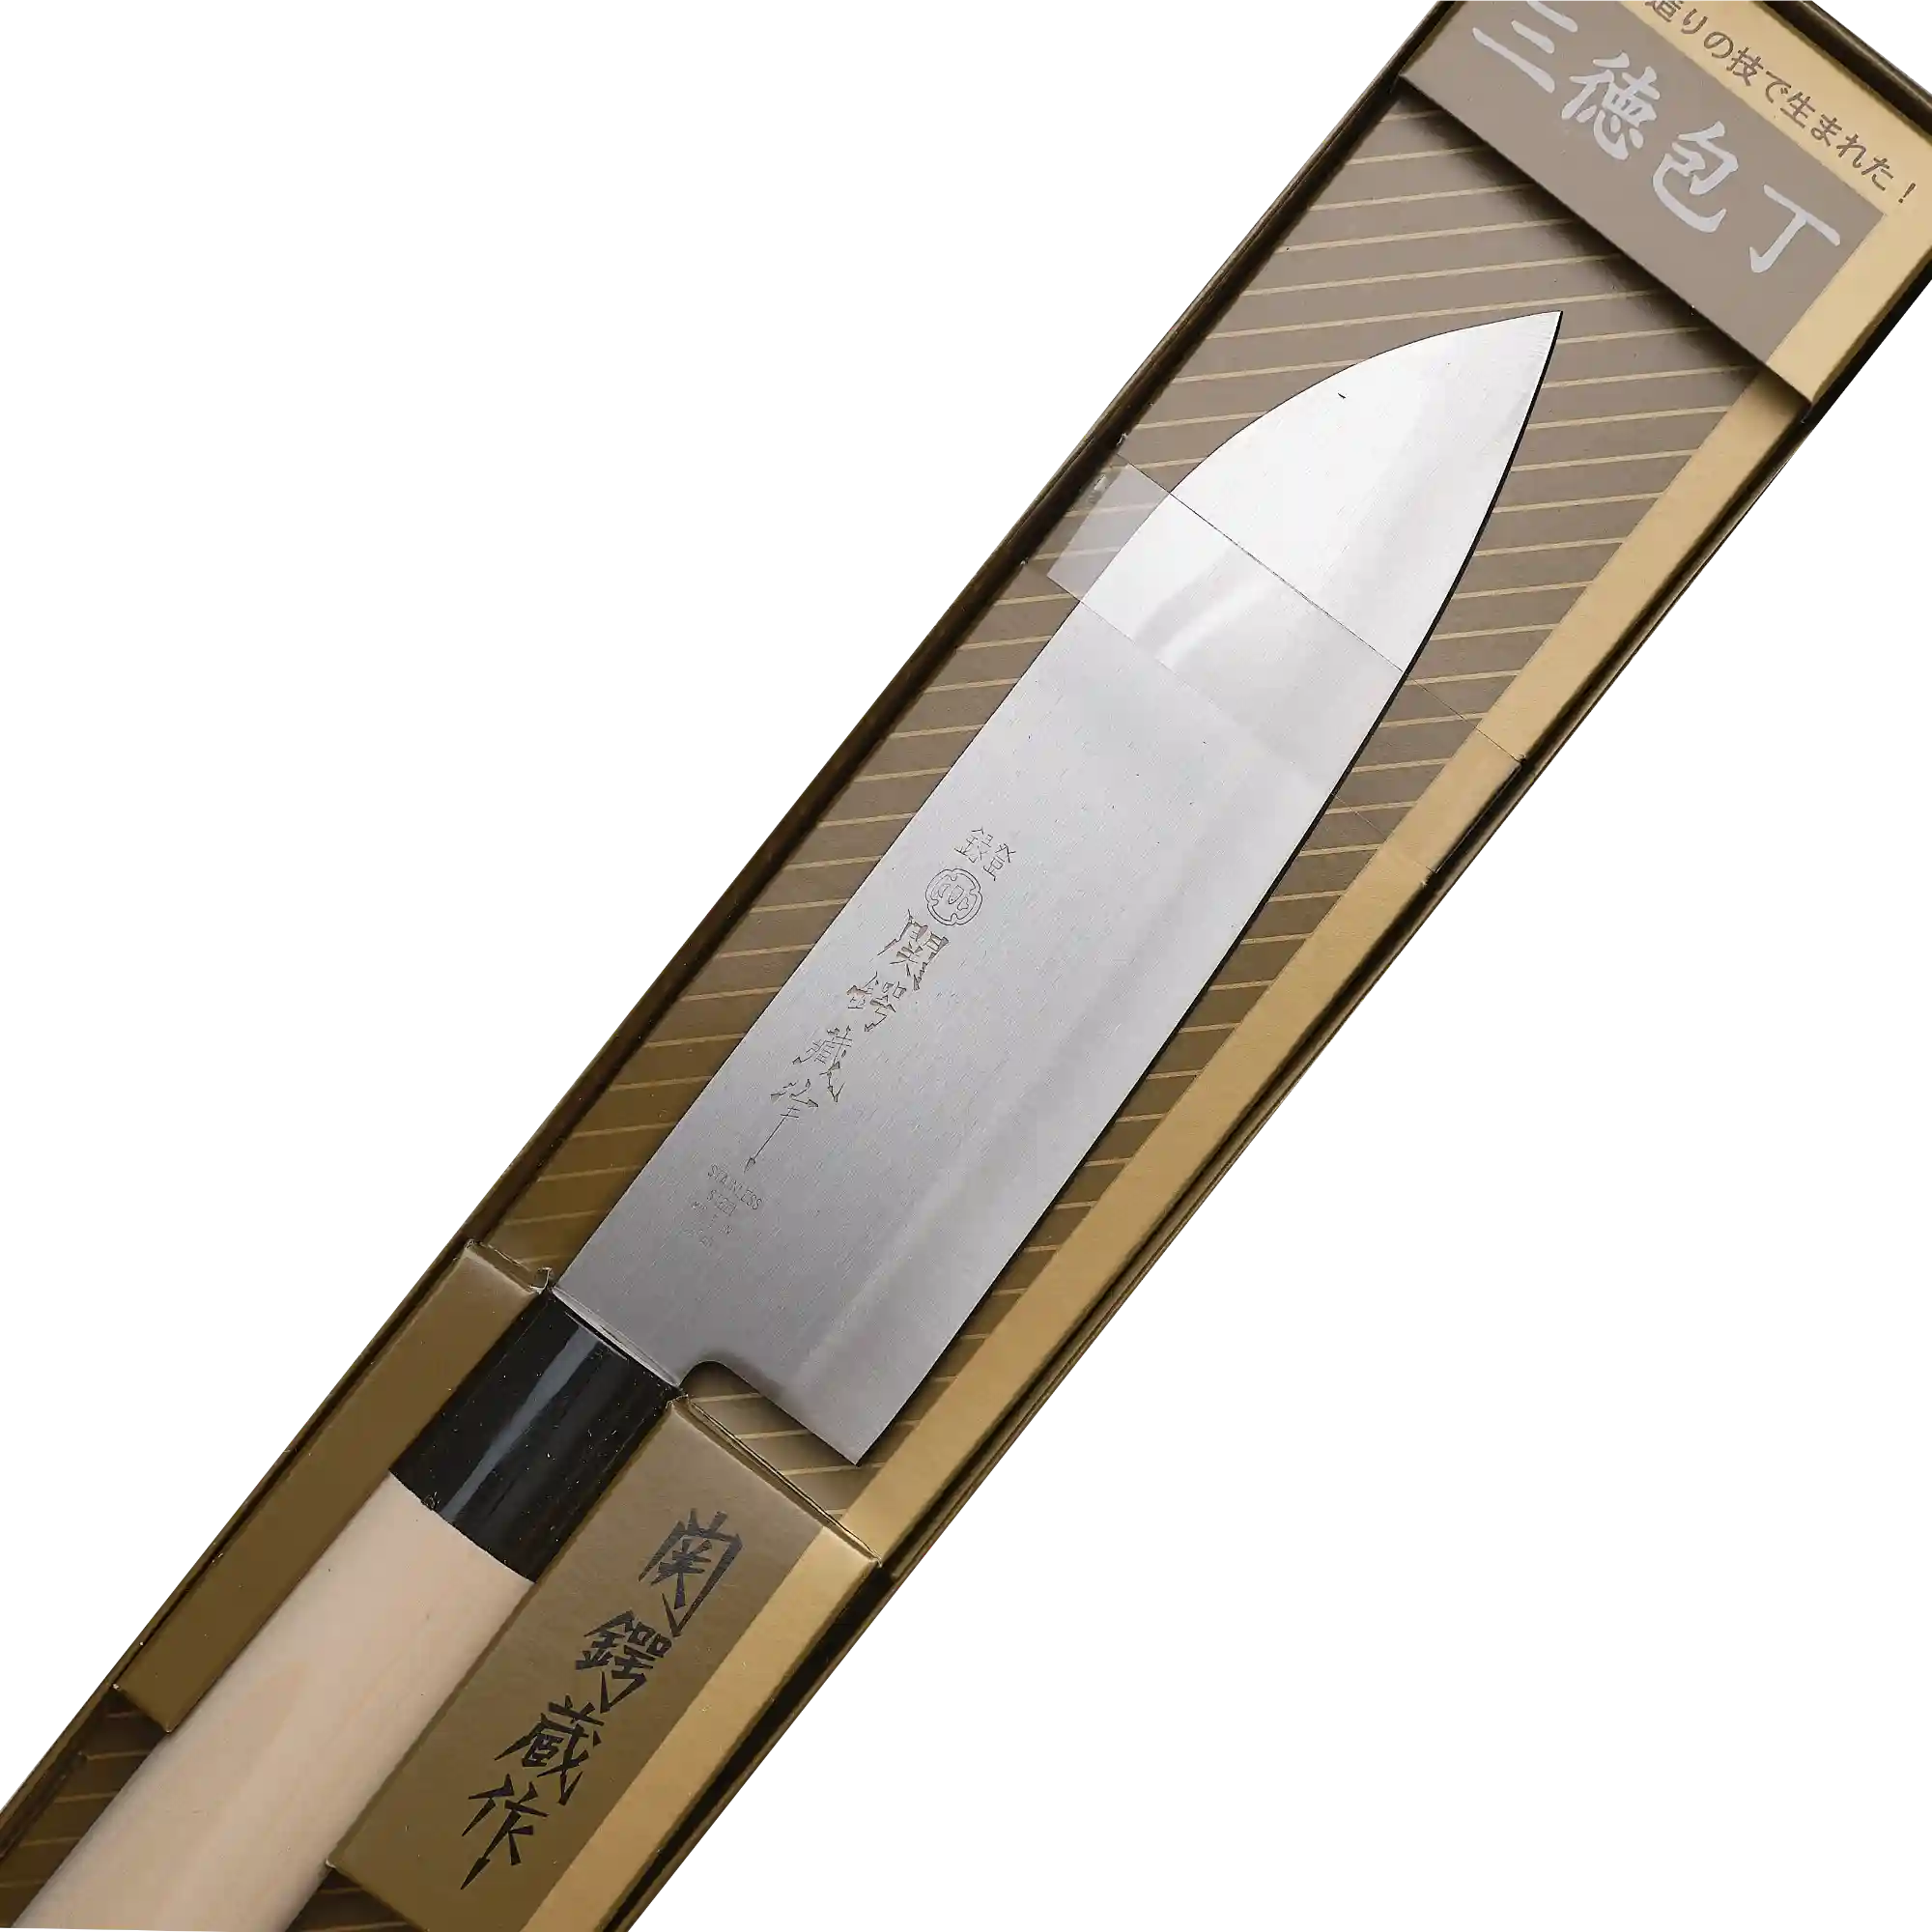 Tsubazo - Santoku knife 170mm - Stainless Steel blade | Made in Japan